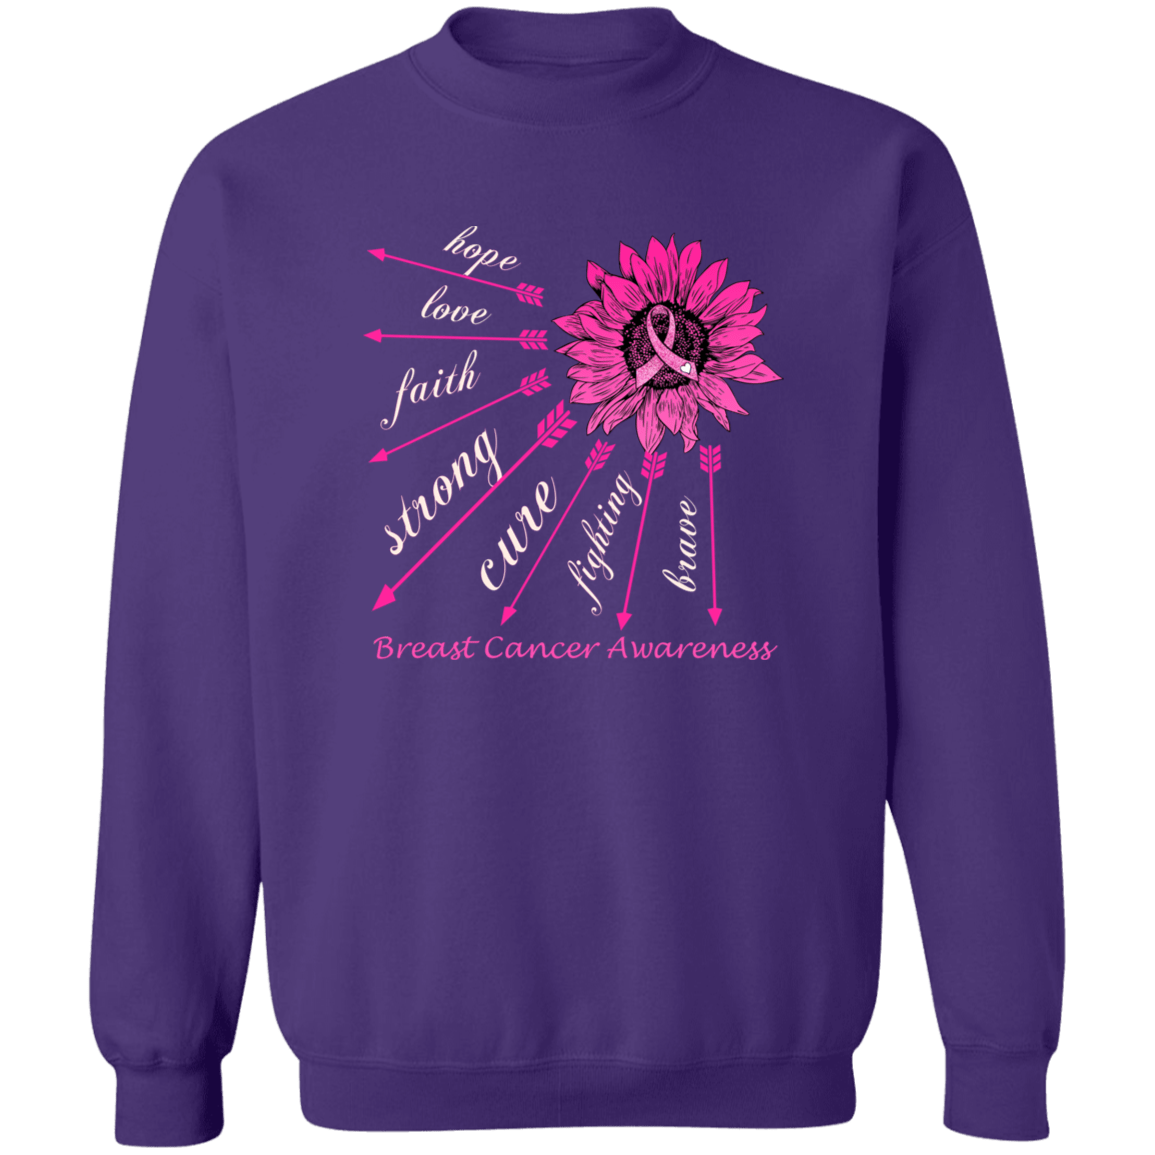 Hope, Love, Faith Breast Cancer Awareness Sweatshirt